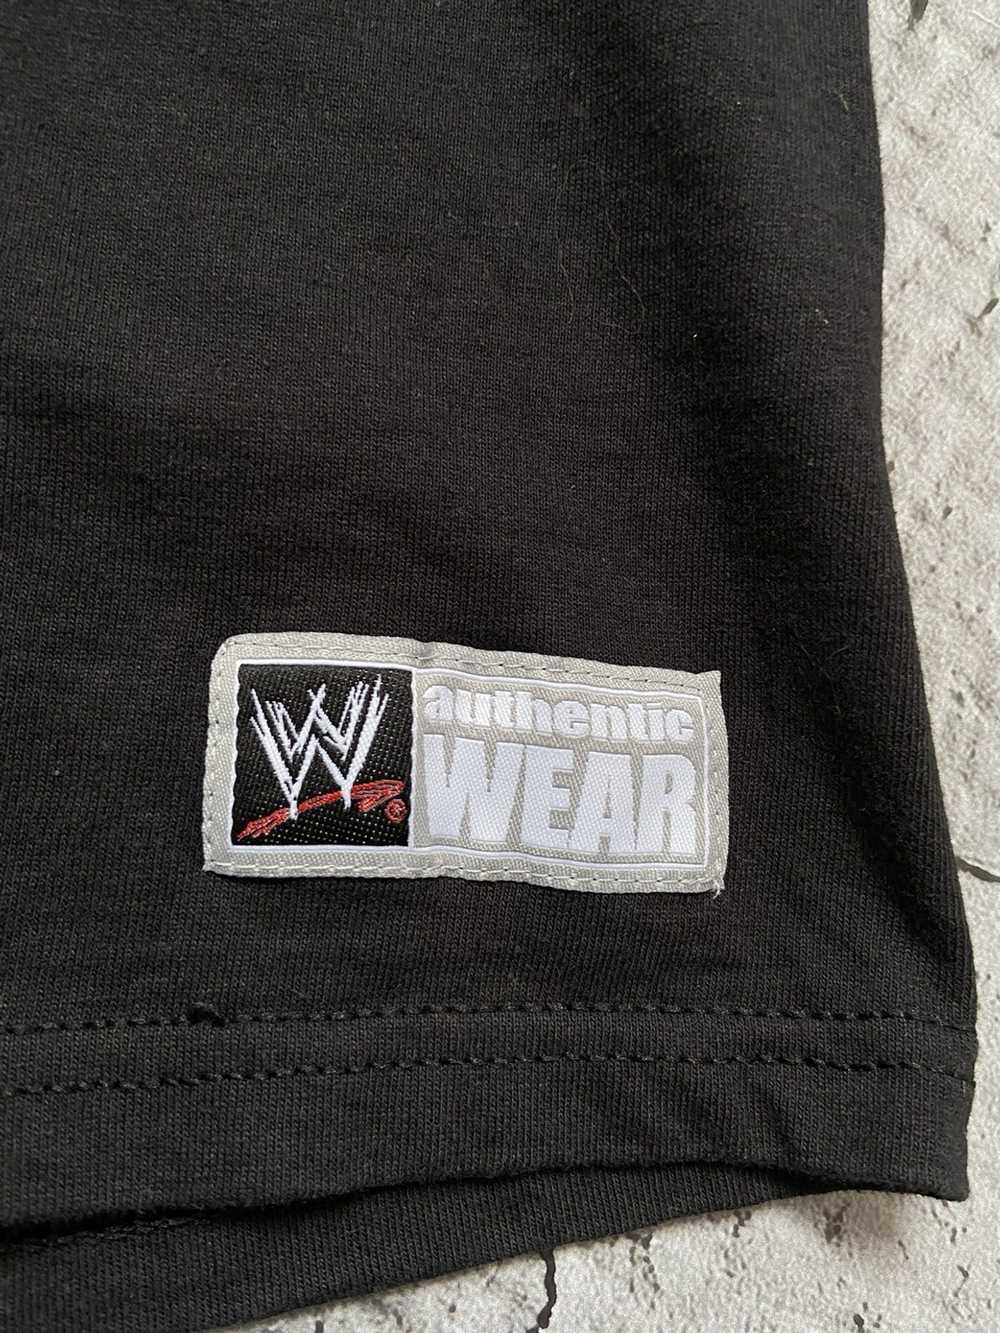 Authentic × Wwe WWE Authentic Edge T-shirt - image 4